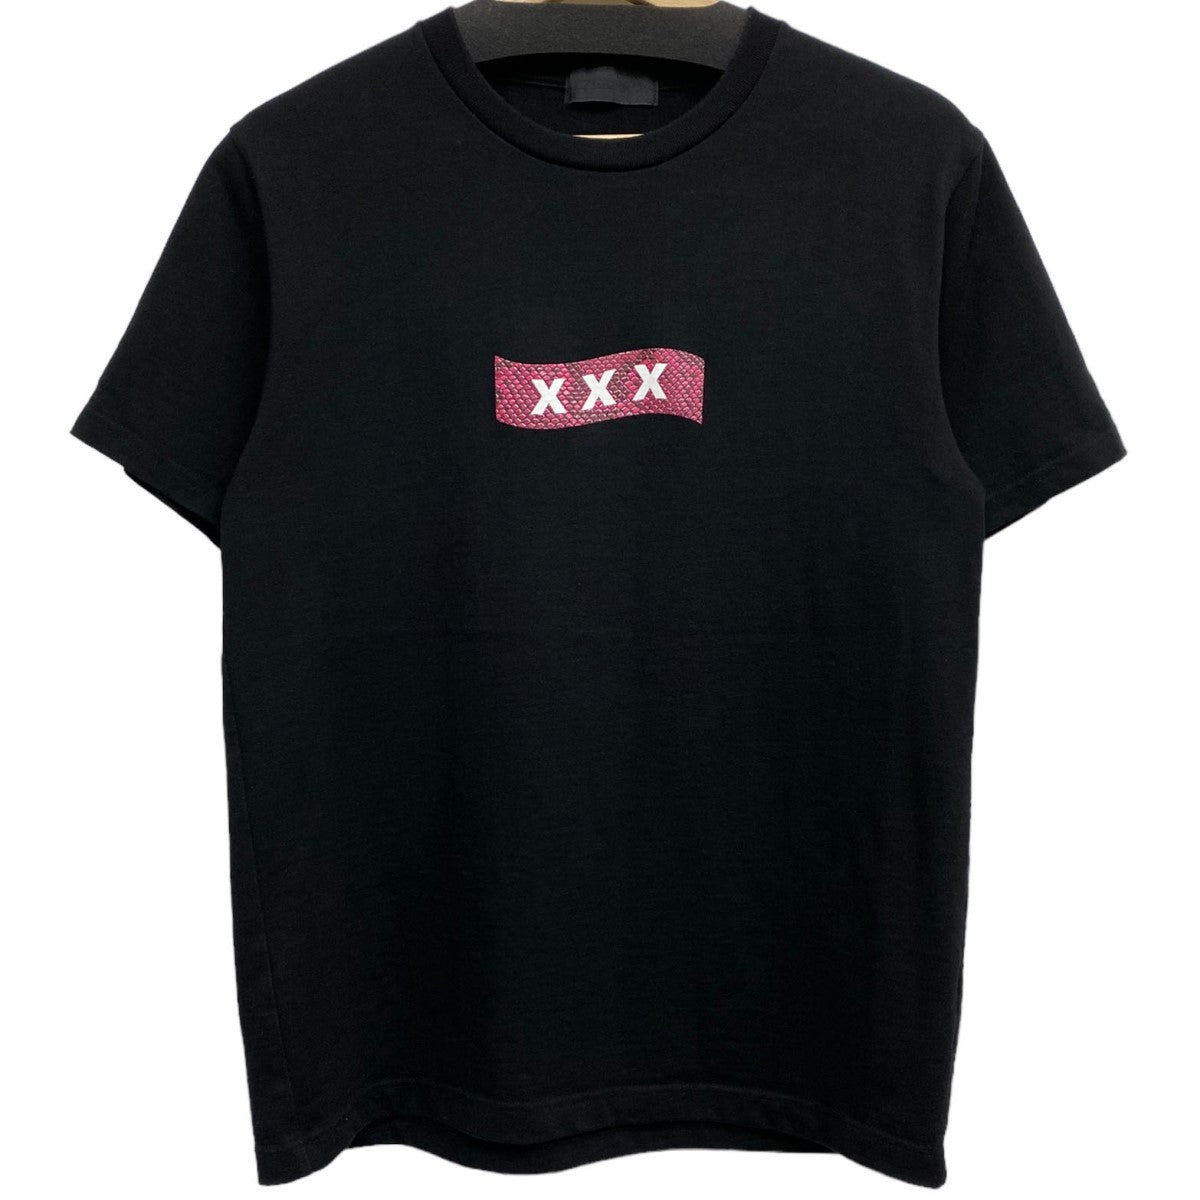 GOD SELECTION XXX(ゴッドセレクショントリプルエックス) Box Logo T-ShirtボックスロゴTシャツ